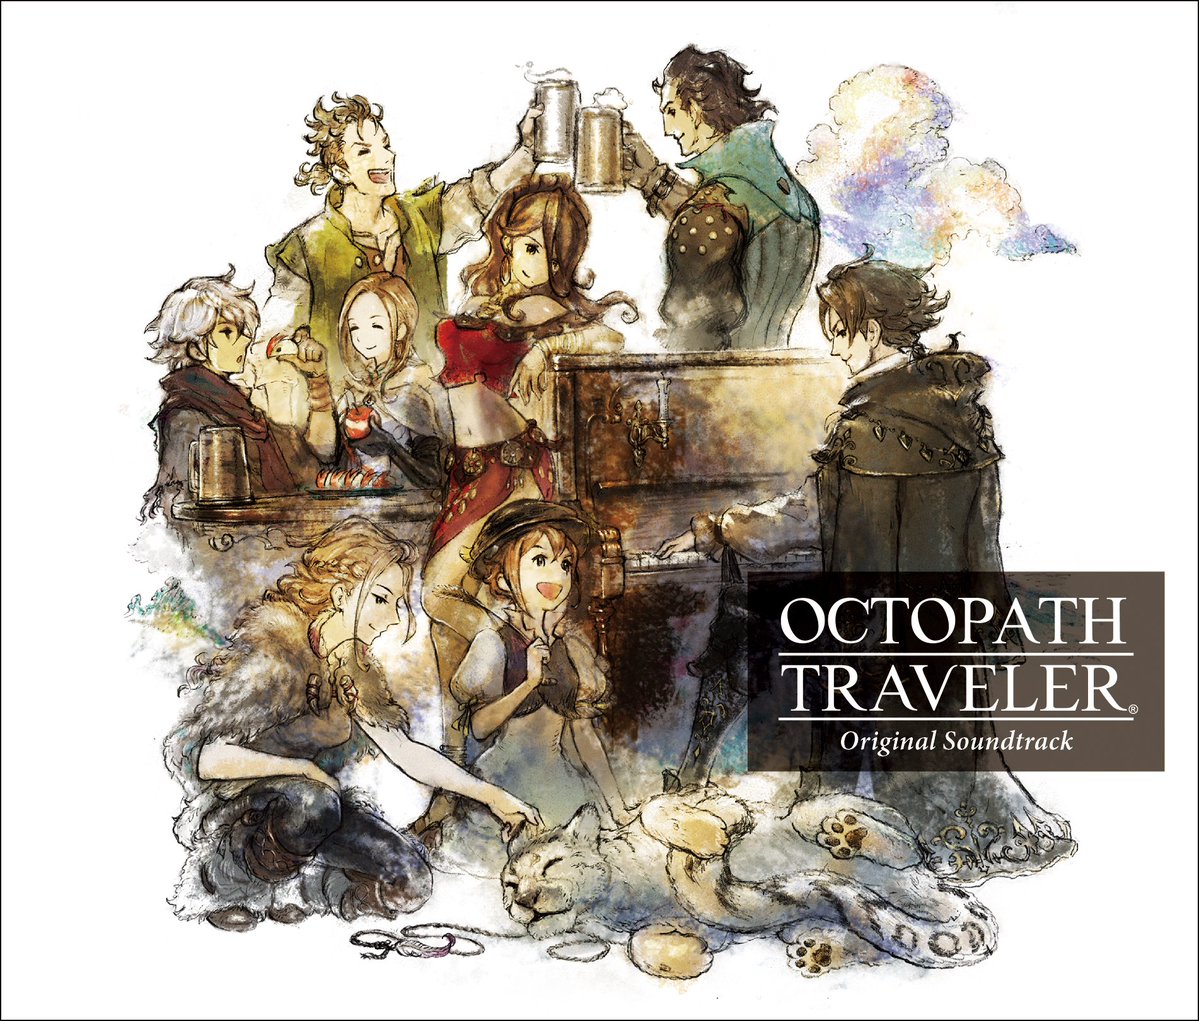 octopath traveler 2 reddit download free